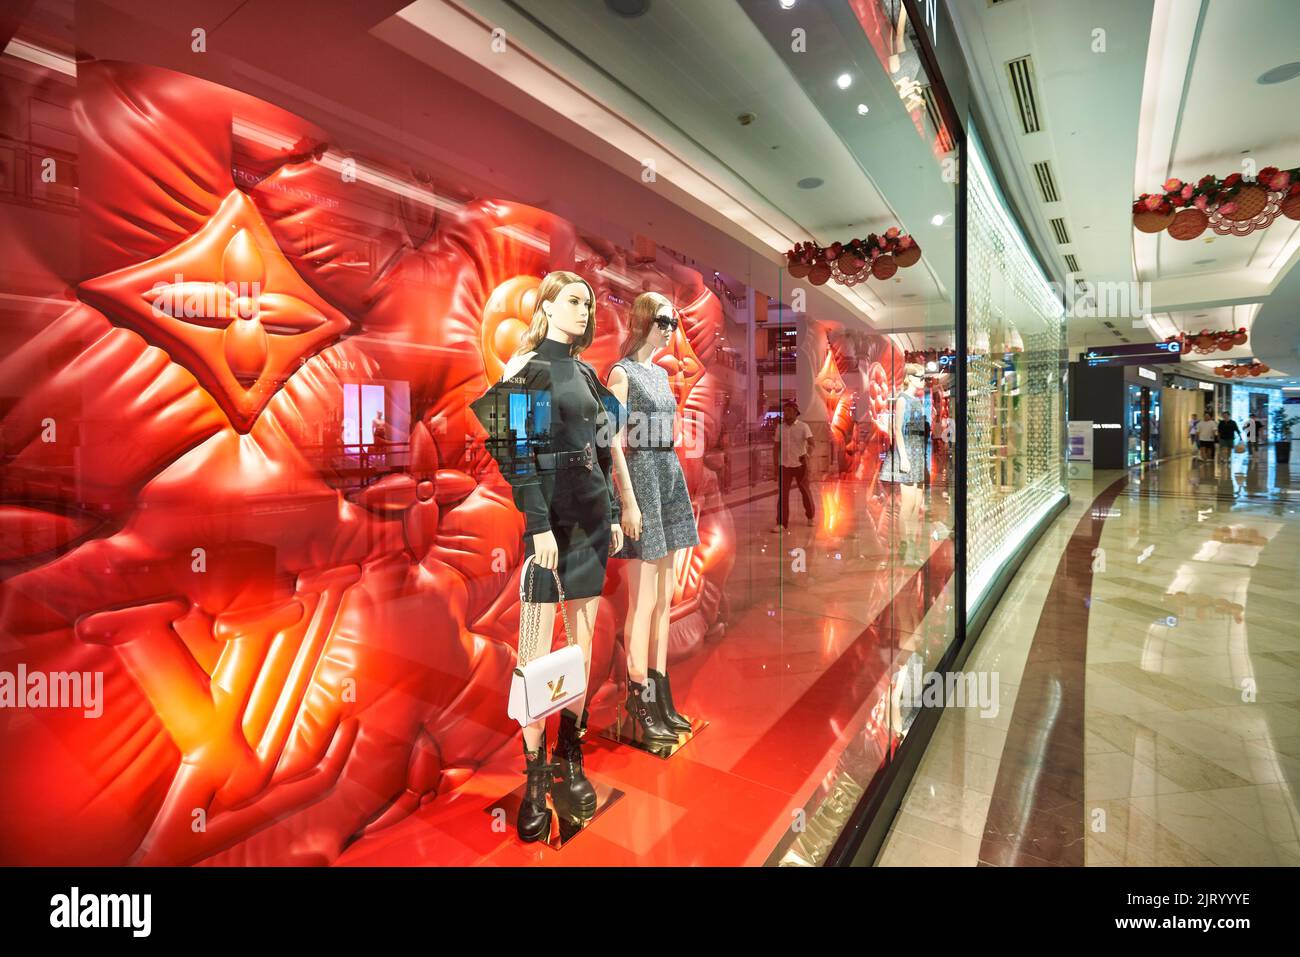 Kuala Lumpur,Malaysia - Nov 5 2018 : Louis Vuitton shop at Pavilion  shopping mall,Bukit Bintang Stock Photo - Alamy